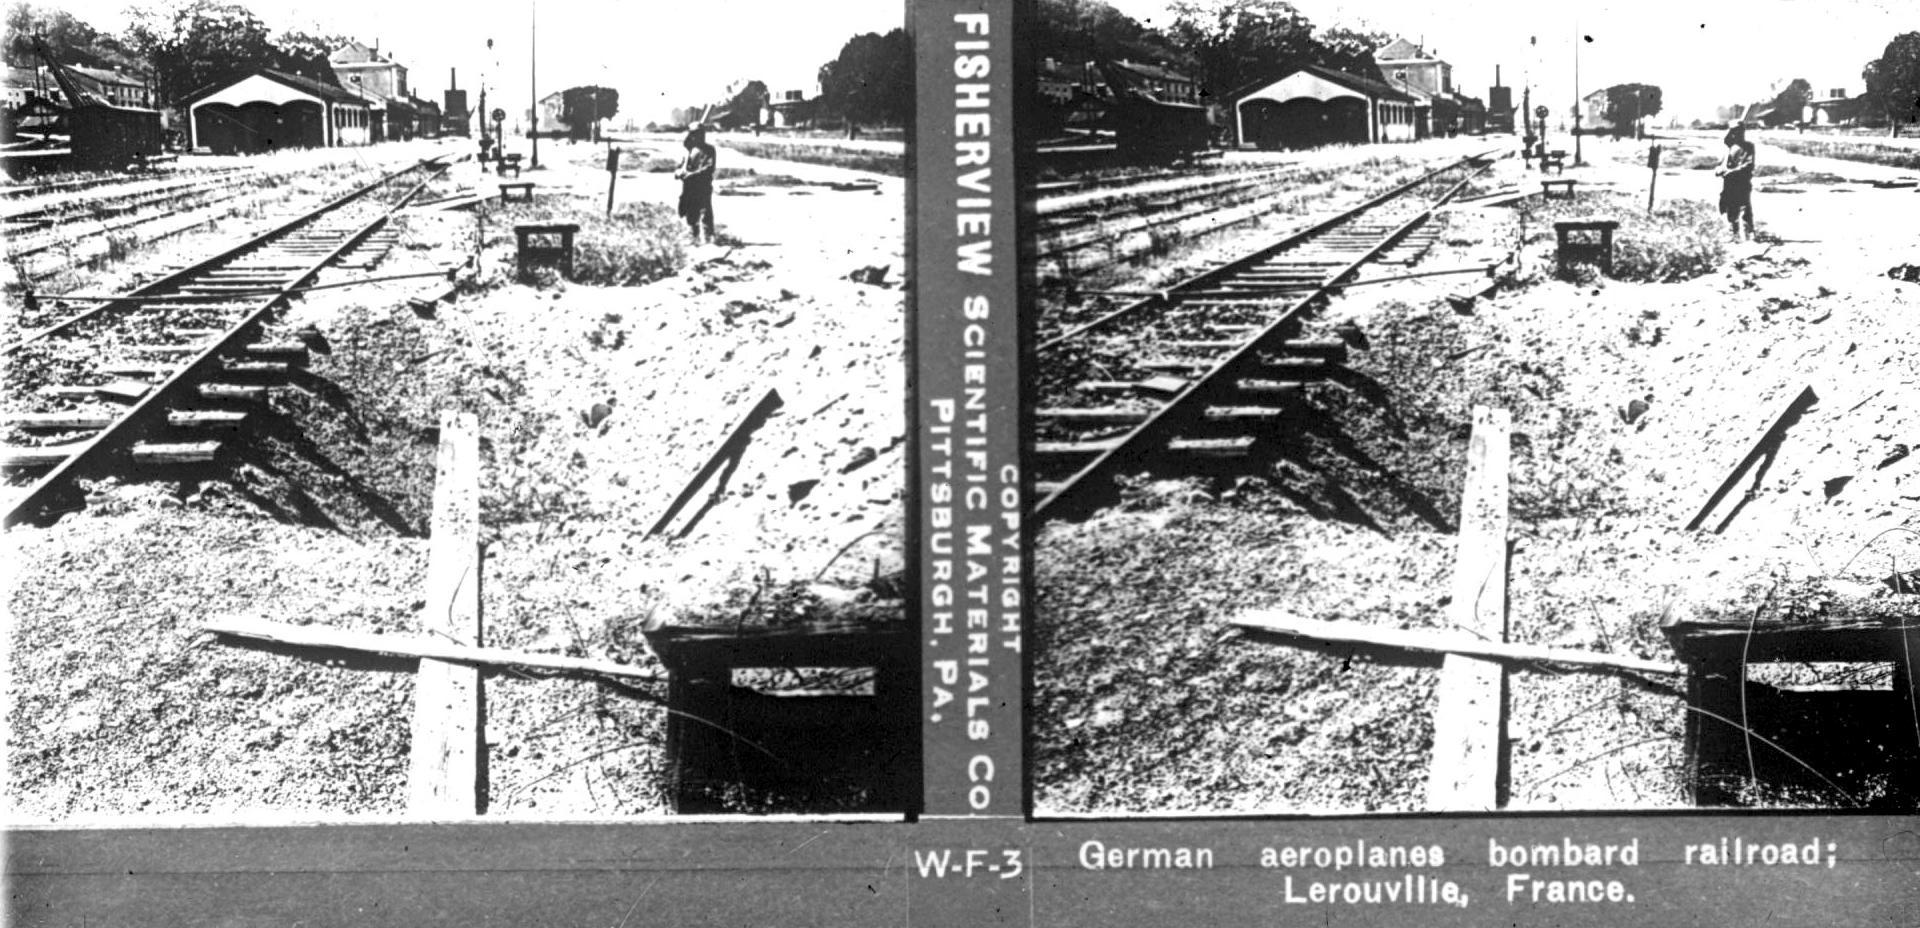 German aeroplanes bombard railroad; Lerouville, France